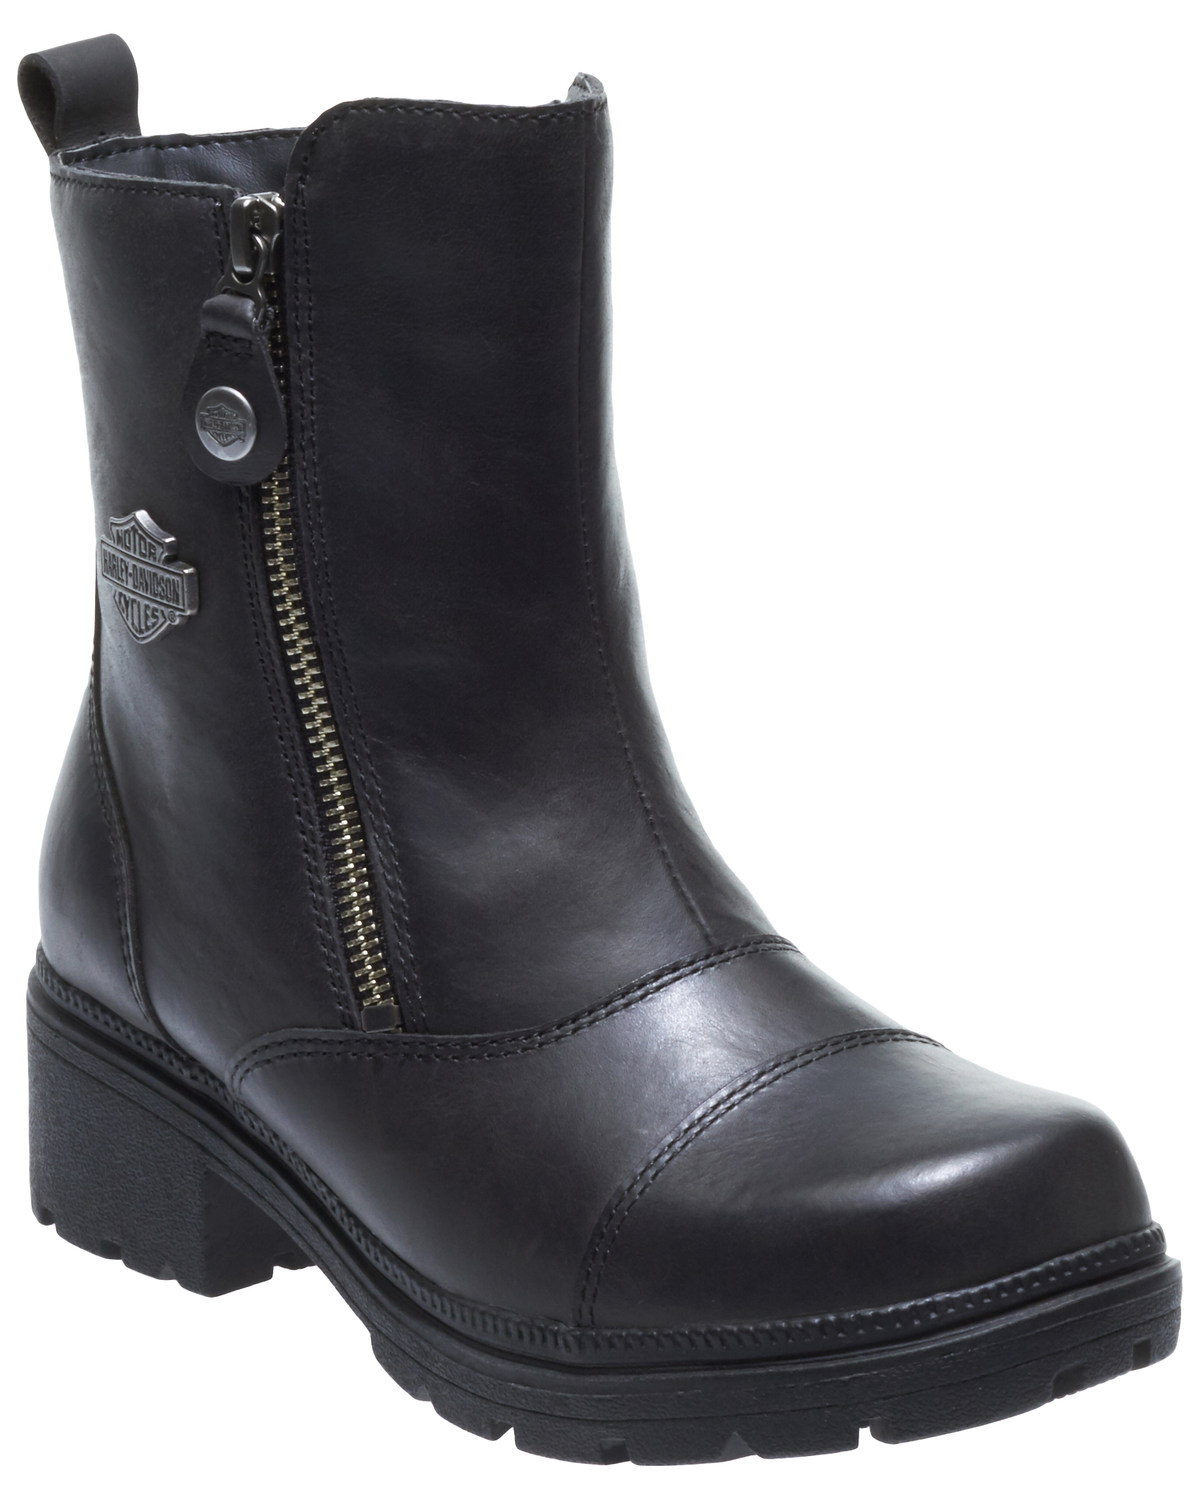 female harley davidson boots